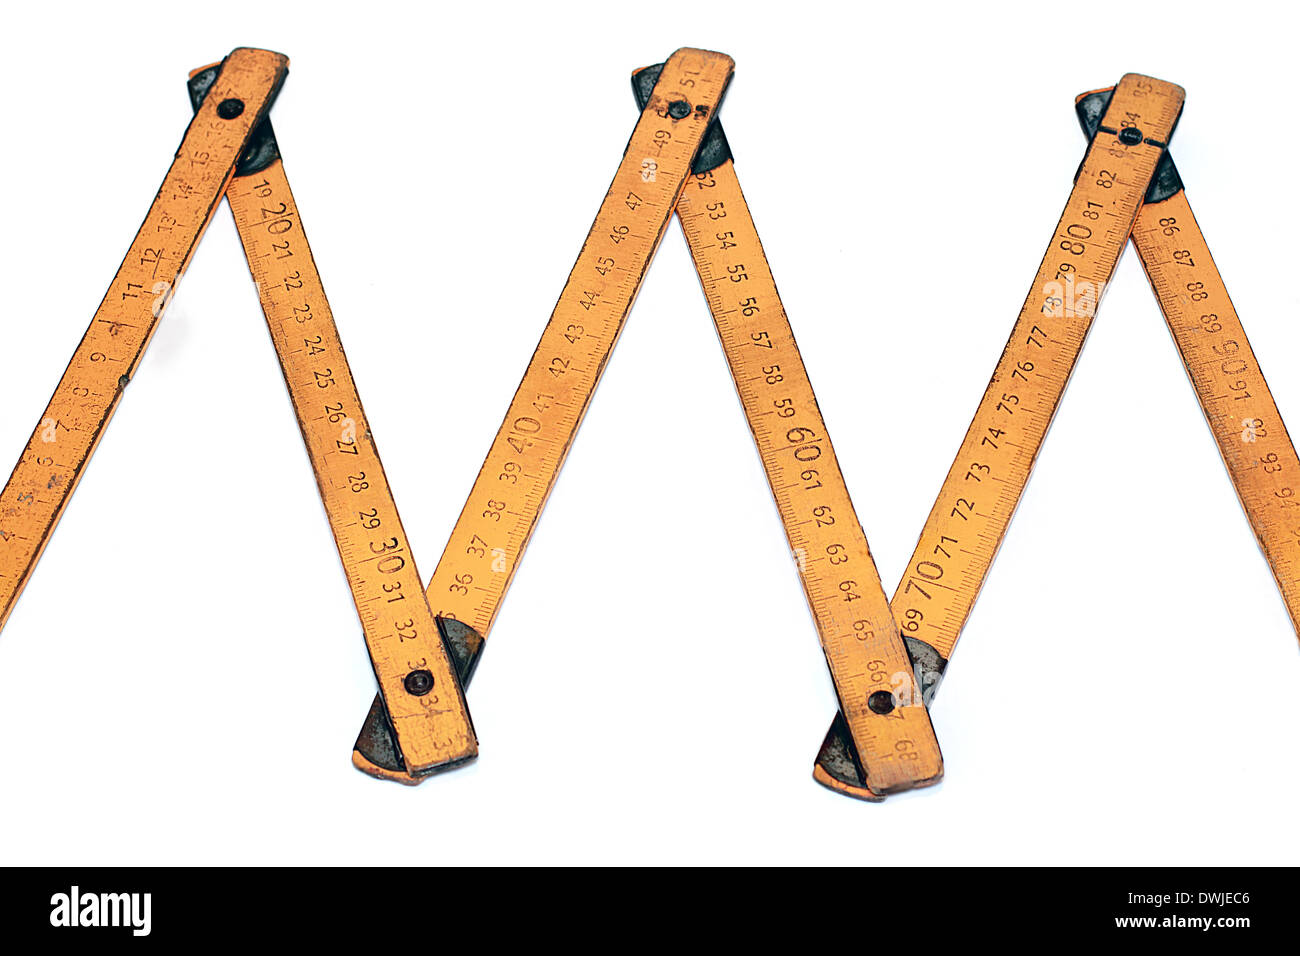 Old Length Measuring Instrument closeup Stock Photo